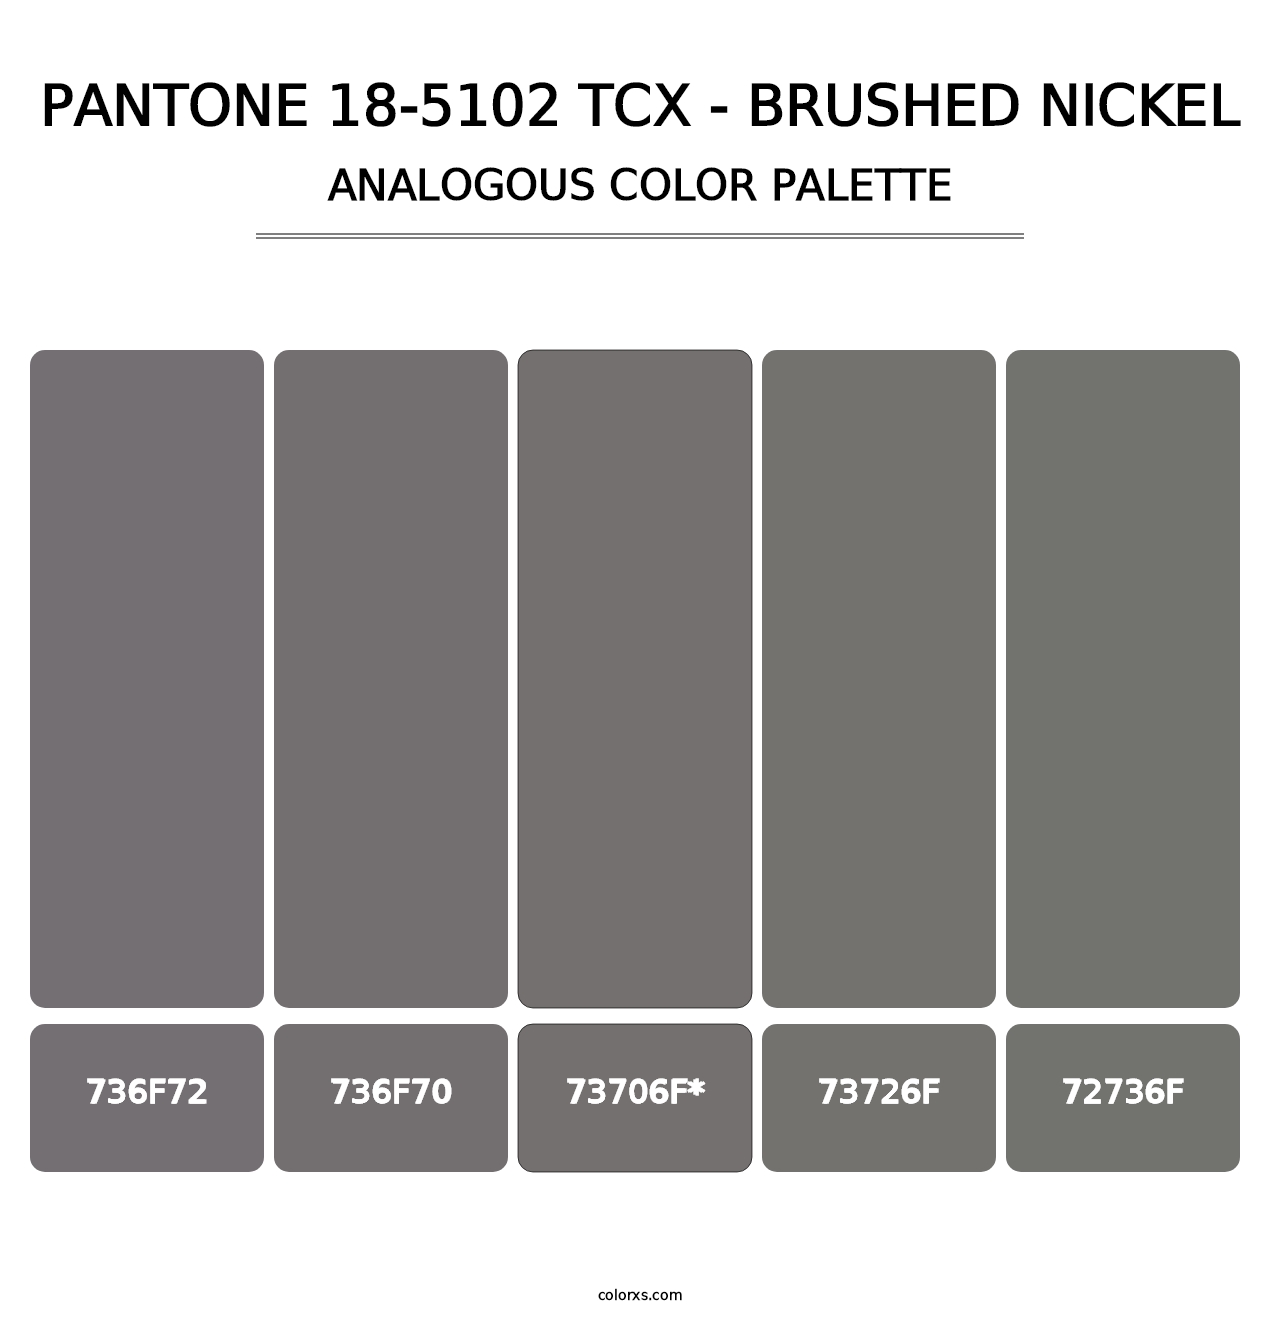 PANTONE 18-5102 TCX - Brushed Nickel - Analogous Color Palette